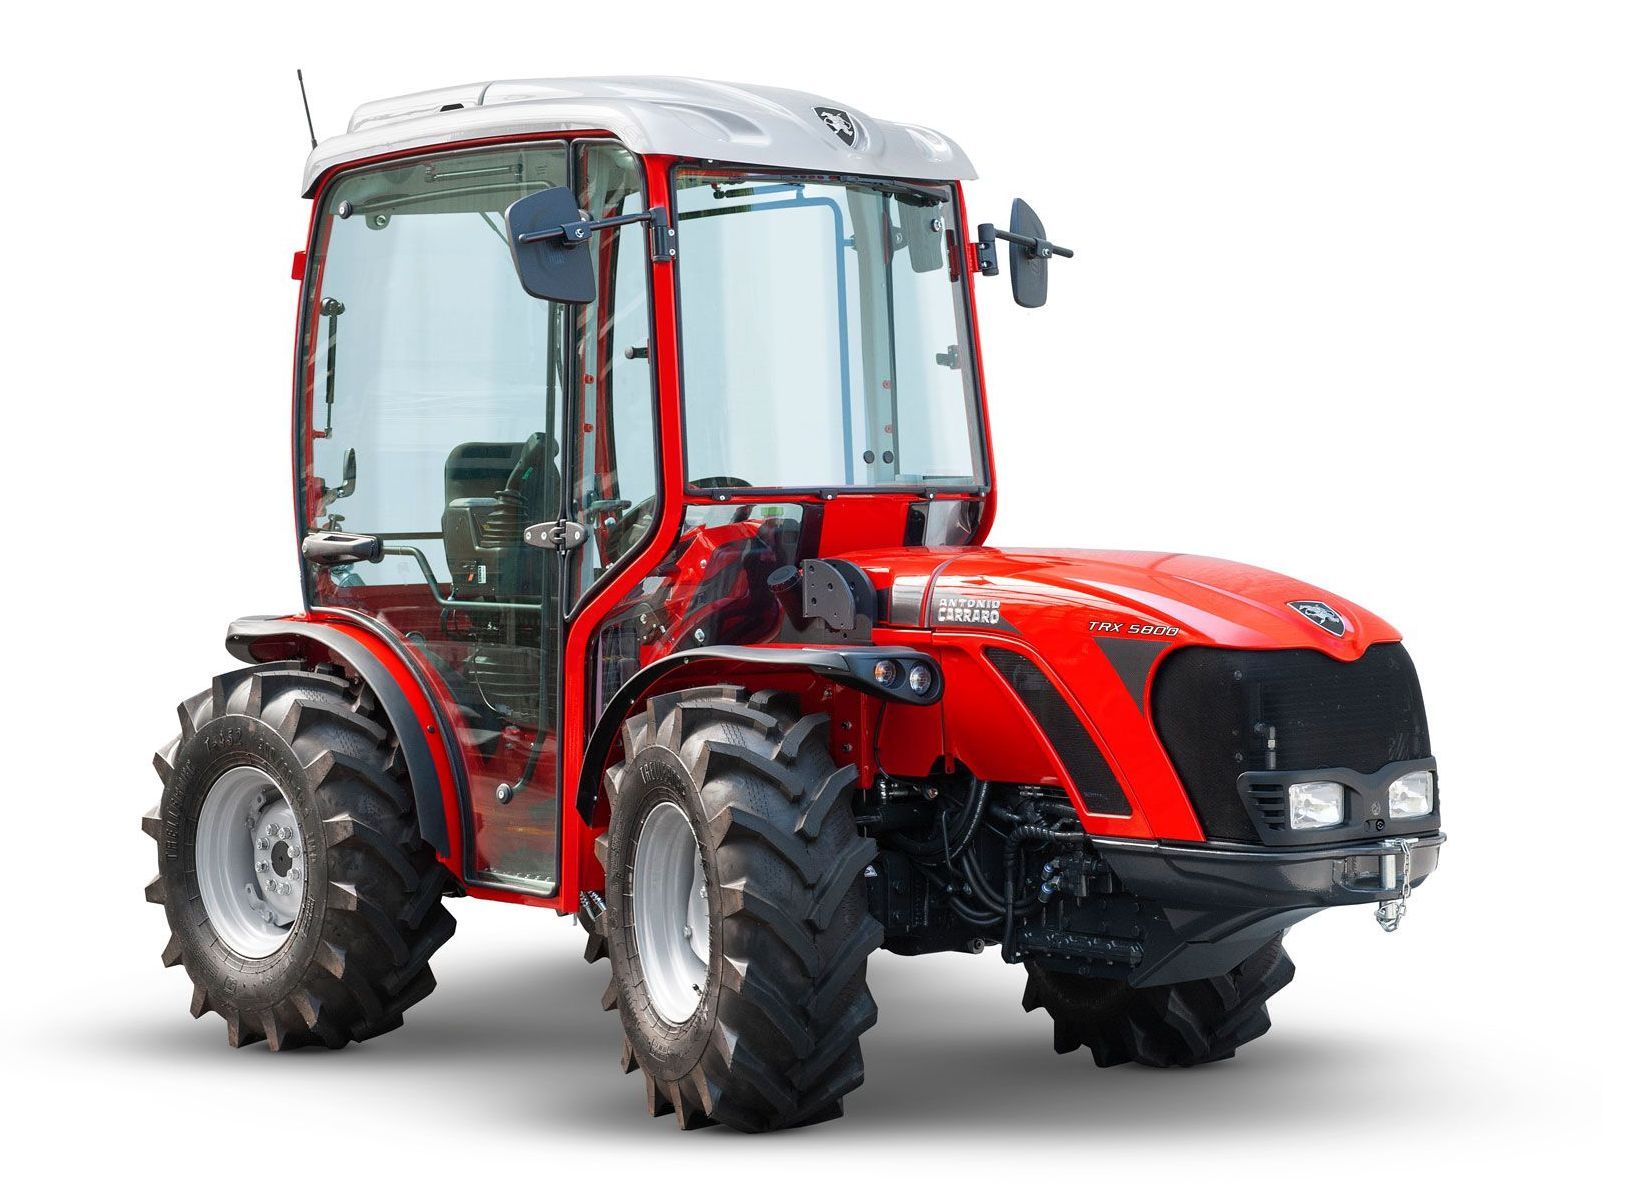 Traktor Antonio Carraro TRX5800 kabína